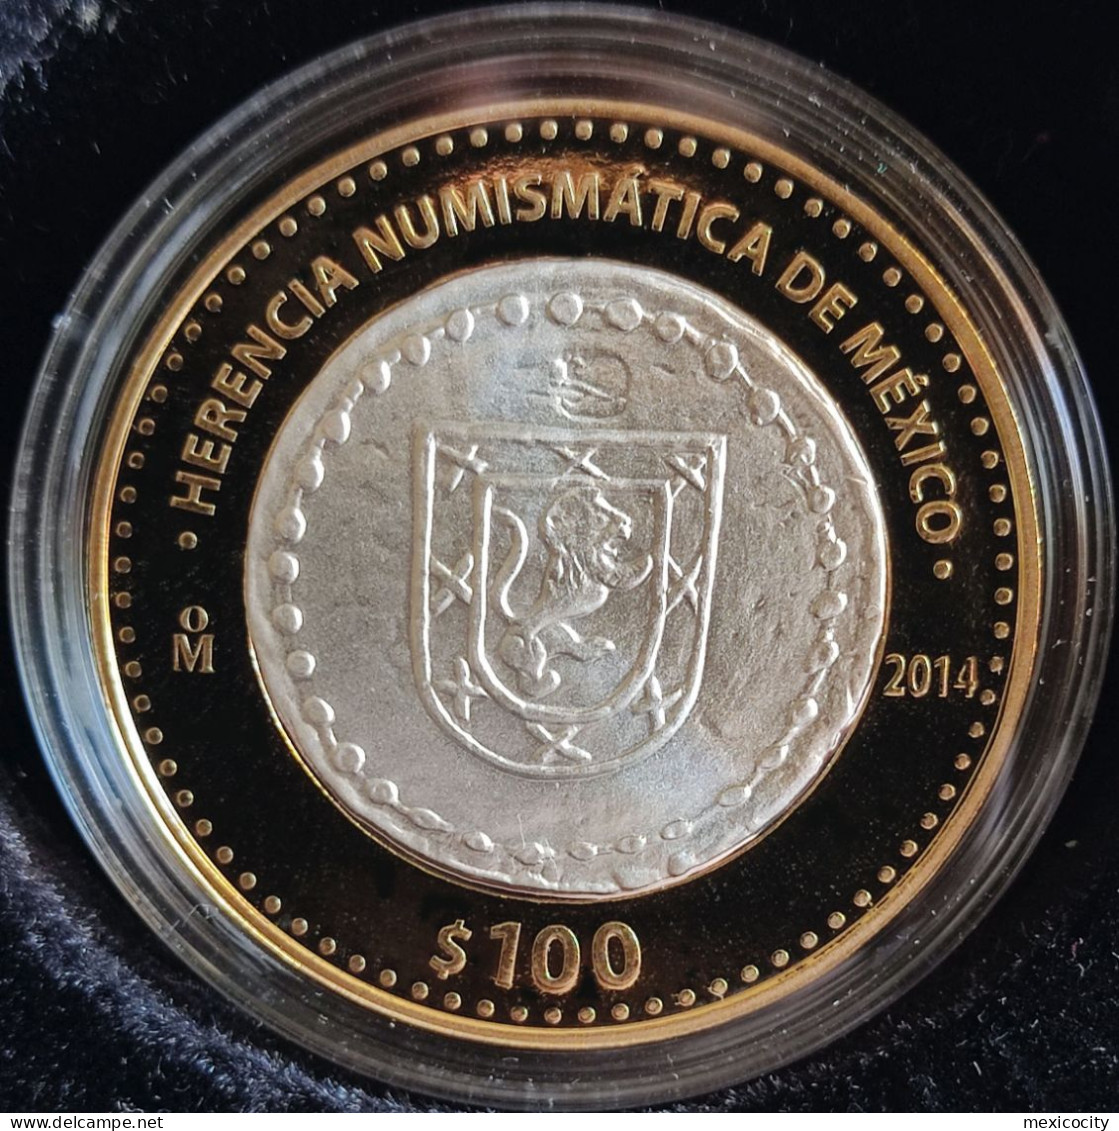 MEXICO 2014 $100 "OAXACA 1812 8 Reales Prov. Coin" Design SILVER Core Num. Heritage Series Proof Edition - México